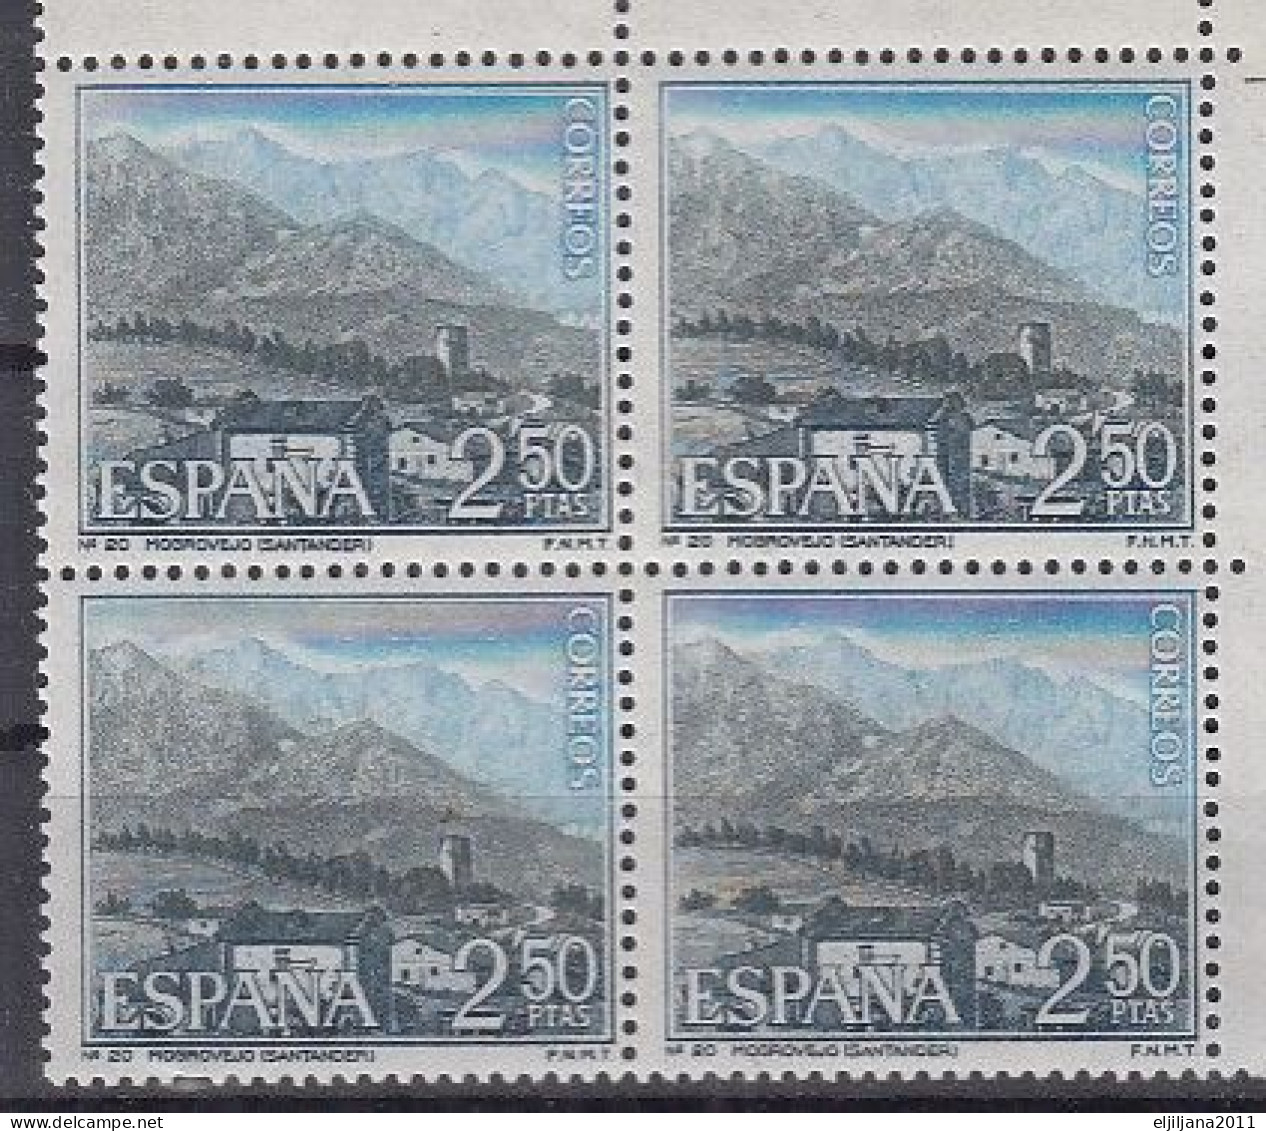 ⁕ SPAIN / ESPANA 1965 ⁕ Mogrovejo - Santander Mi.1589 ⁕ MNH Block Of 4 - Nuevos